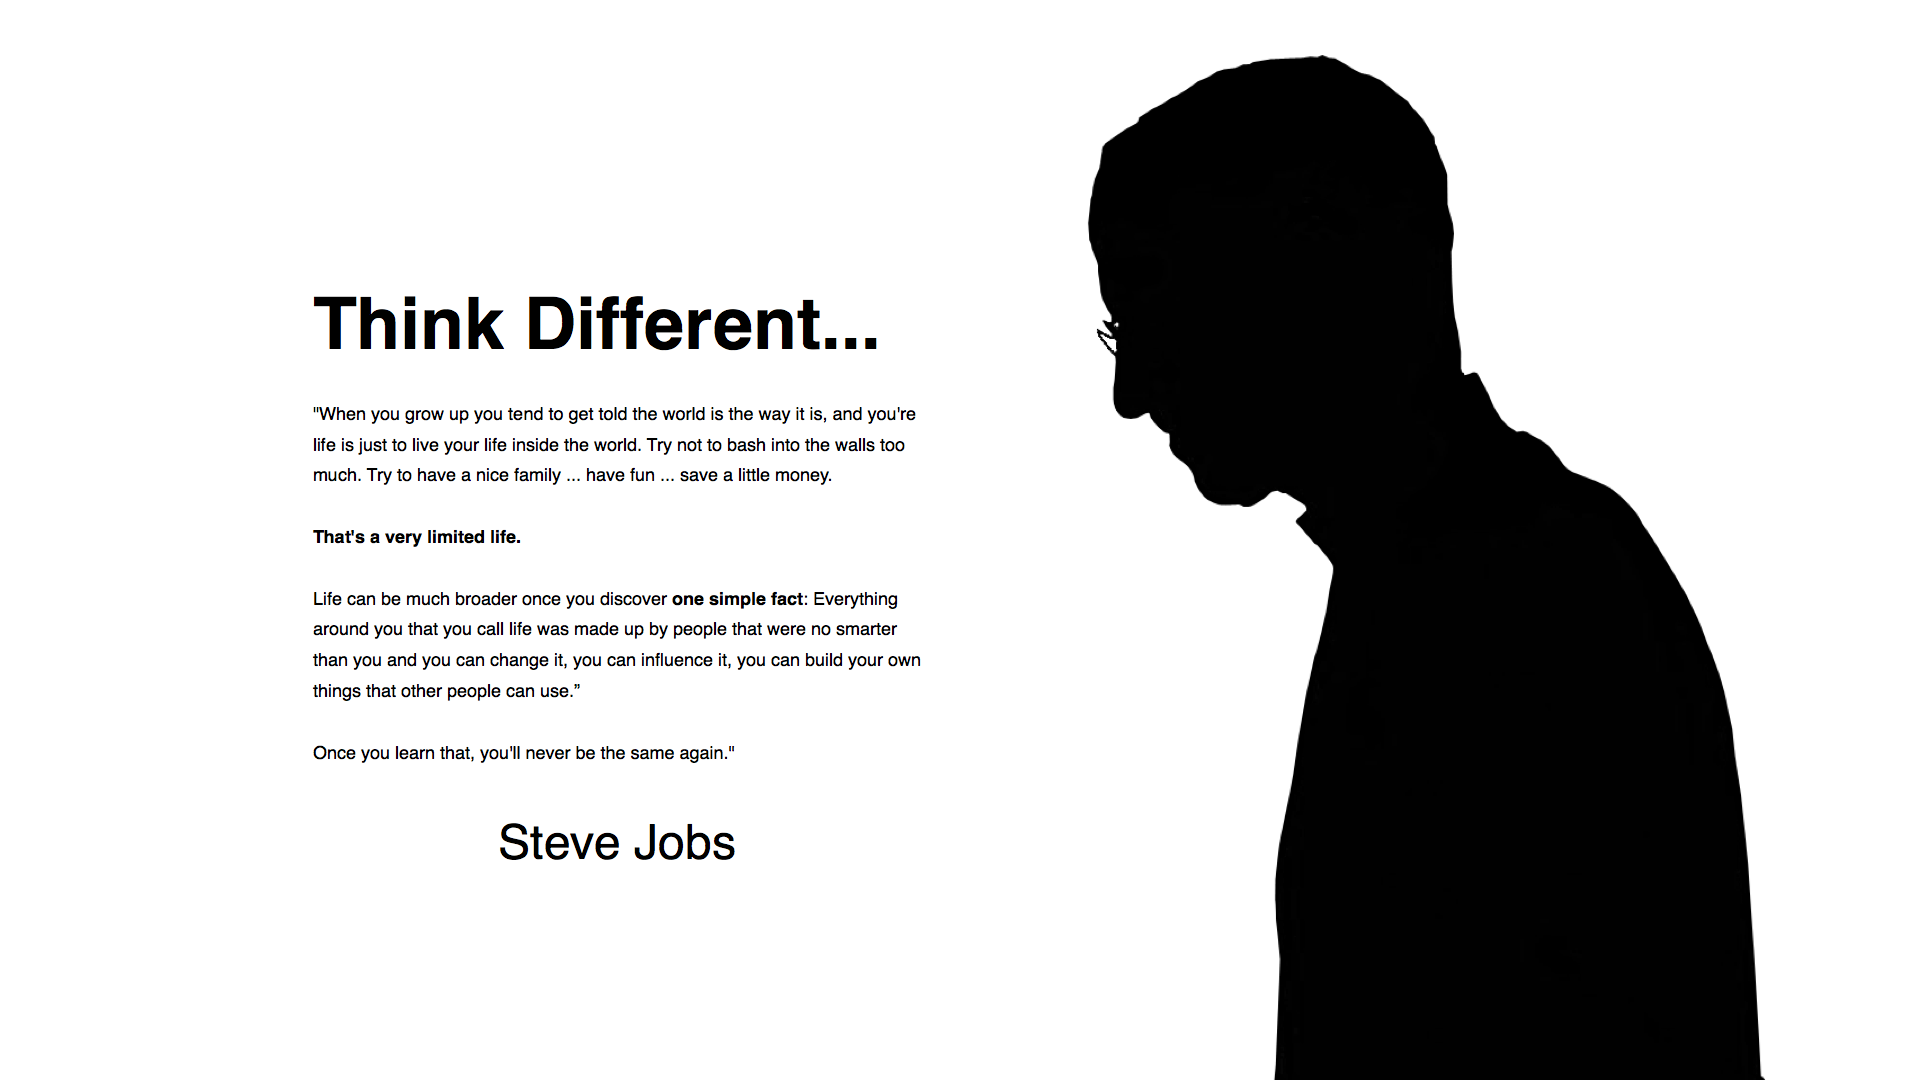 Steve Jobs Wallpaper Mac - 1920x1080 Wallpaper 